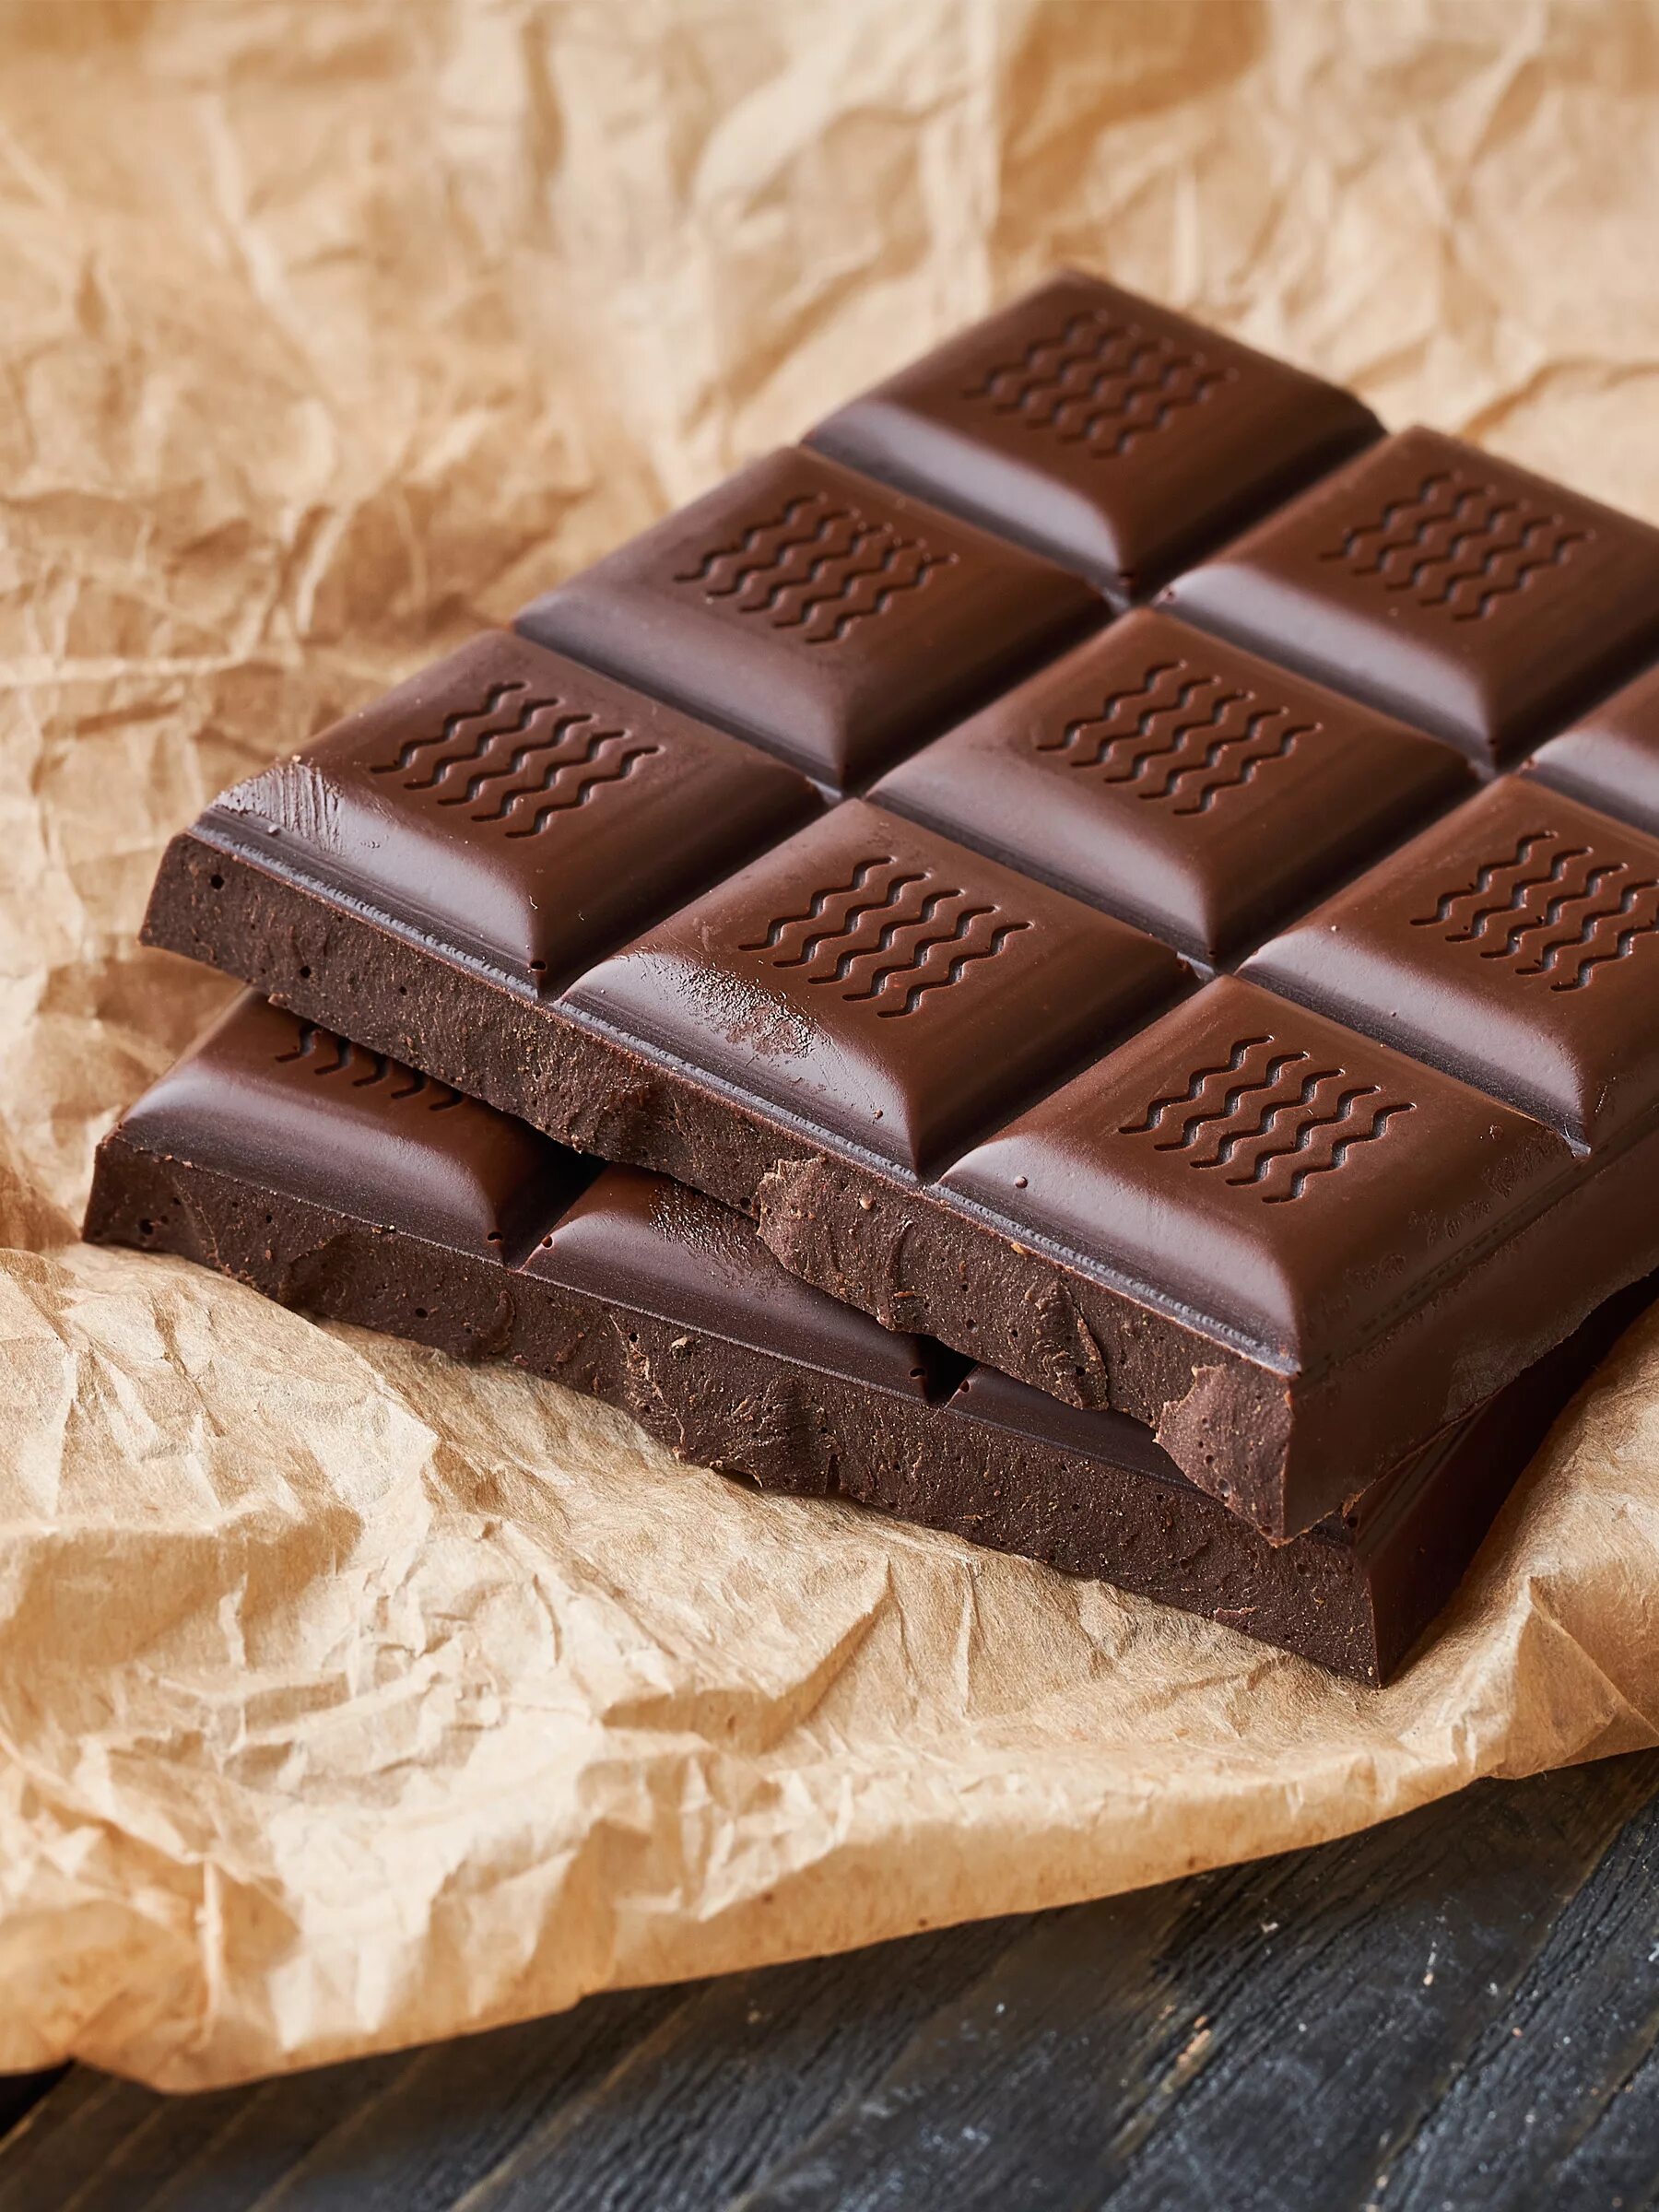 Chocolate pictures. Шоколад. Темный шоколад. Вкусные шоколадки. Качественный шоколад.